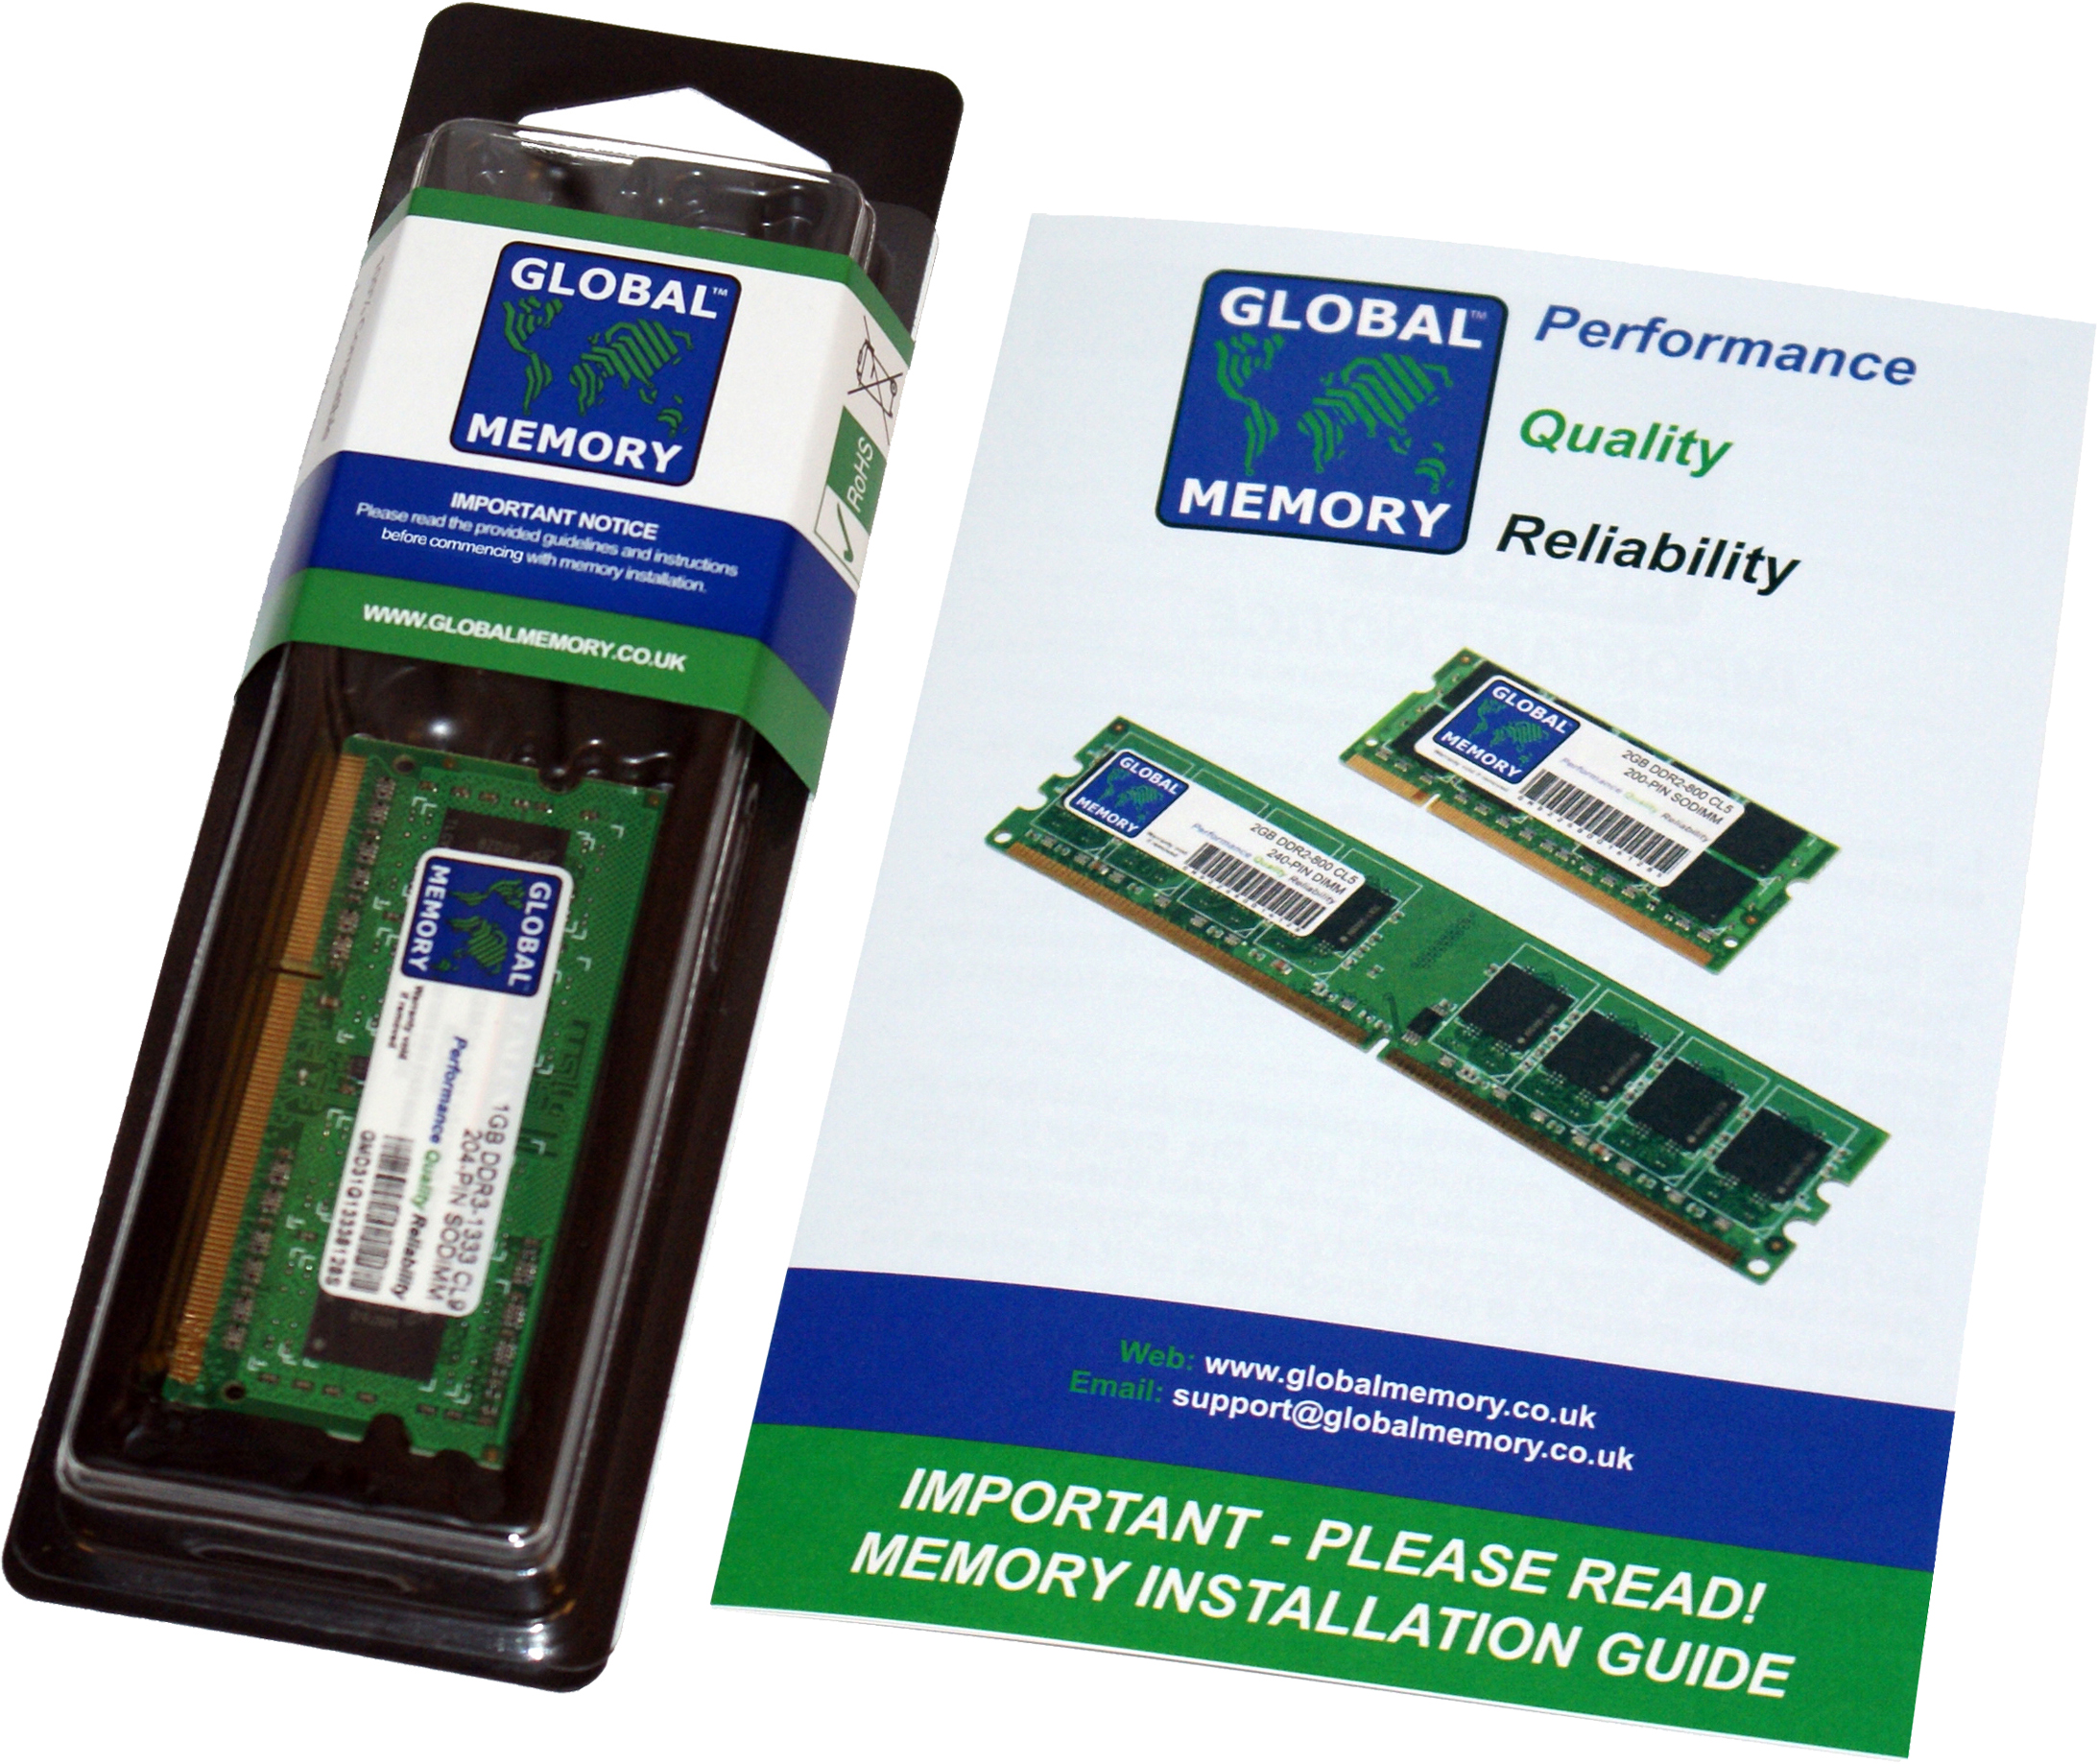 4GB DDR4 2666MHz PC4-21300 260-PIN SODIMM MEMORY RAM FOR LENOVO LAPTOPS/NOTEBOOKS